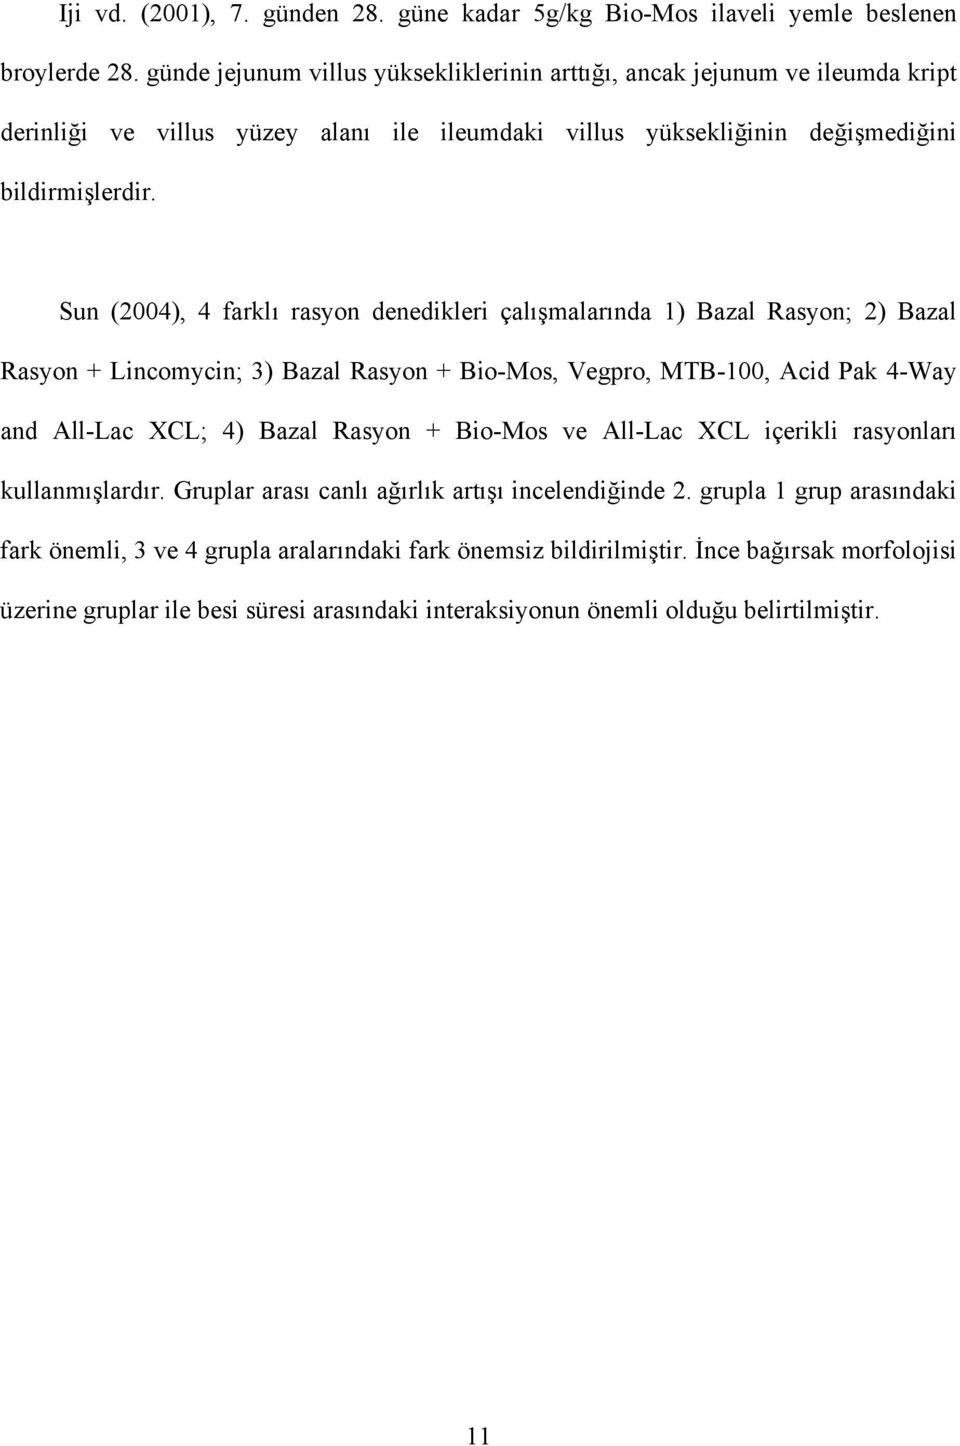 Sun (2004), 4 farklı rasyon denedikleri çalışmalarında 1) Bazal Rasyon; 2) Bazal Rasyon + Lincomycin; 3) Bazal Rasyon + Bio-Mos, Vegpro, MTB-100, Acid Pak 4-Way and All-Lac XCL; 4) Bazal Rasyon +